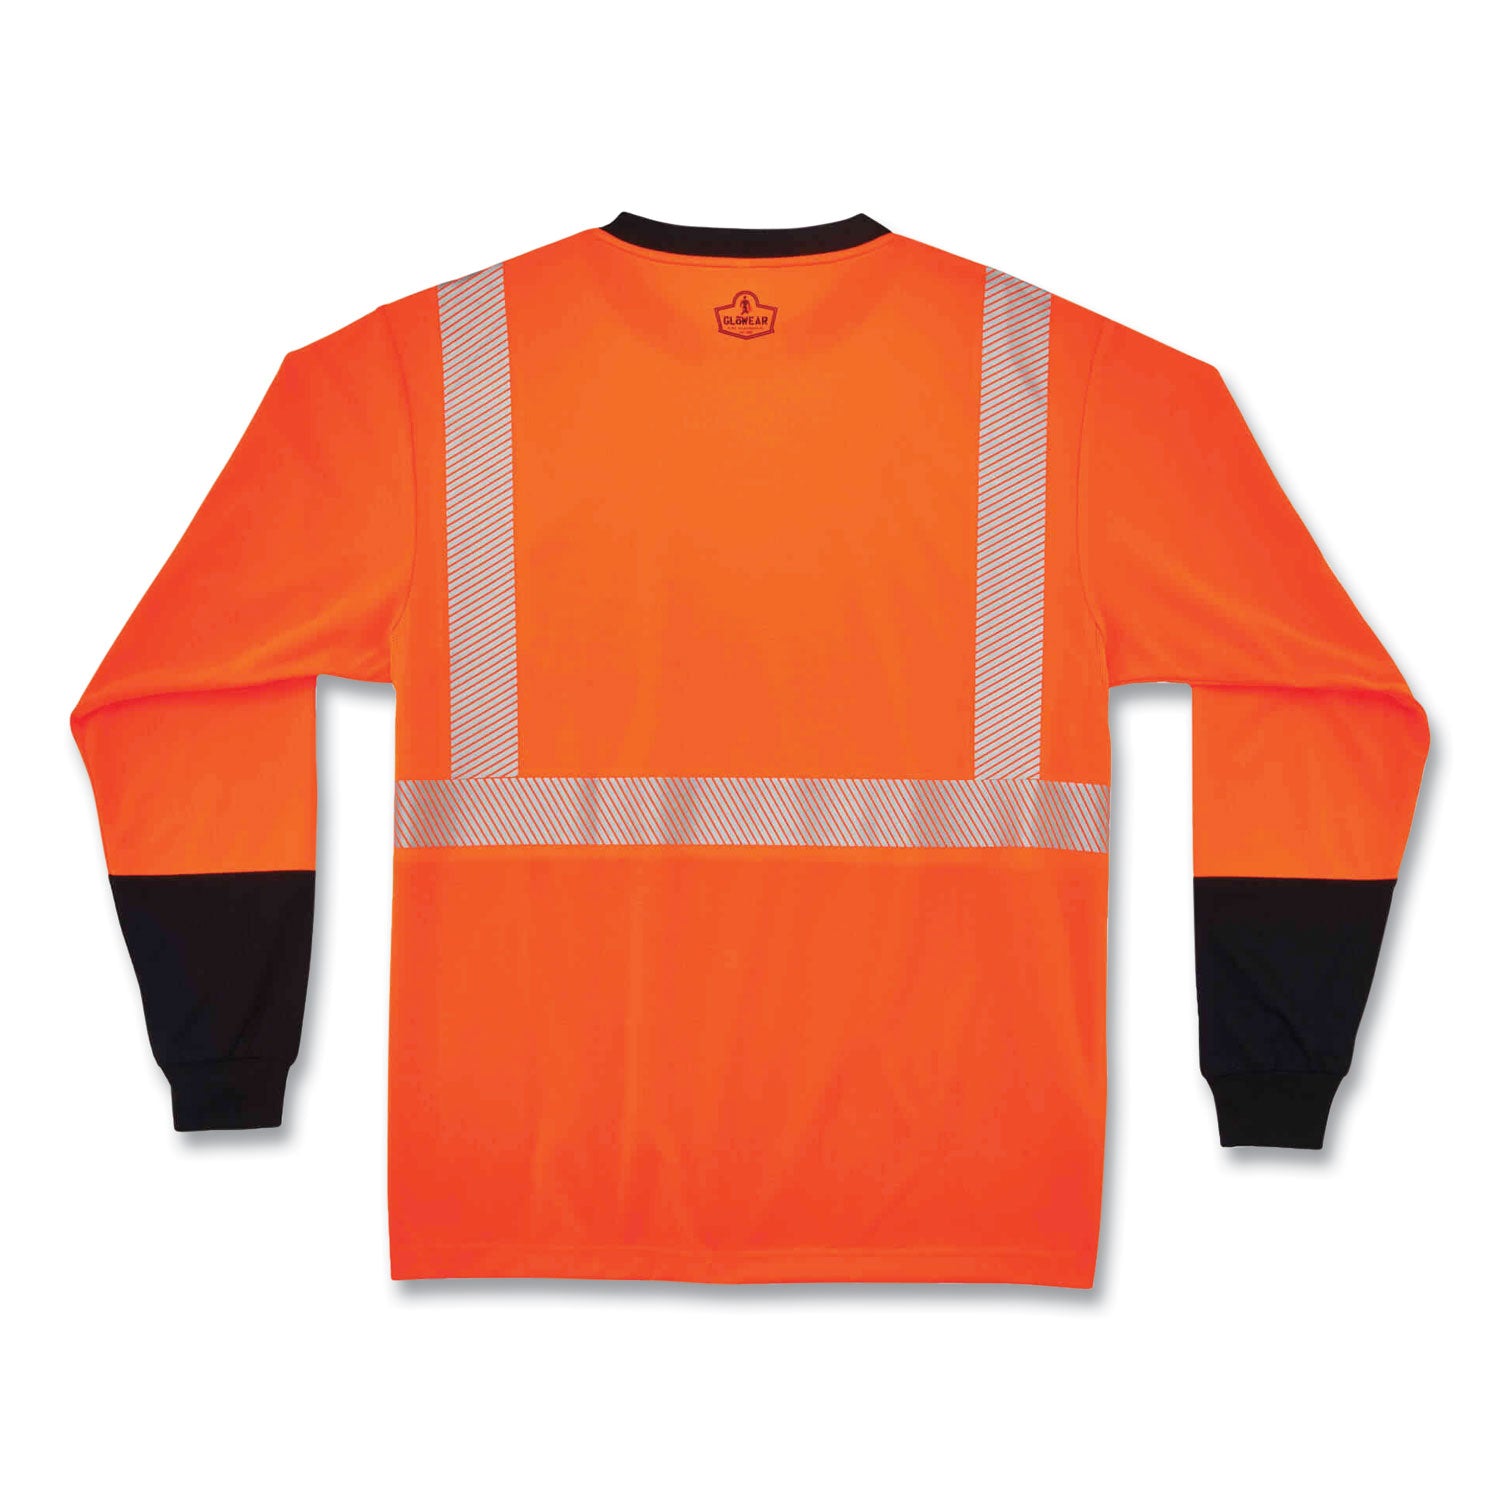 glowear-8281bk-class-2-long-sleeve-shirt-with-black-bottom-polyester-2x-large-orange-ships-in-1-3-business-days_ego22686 - 4